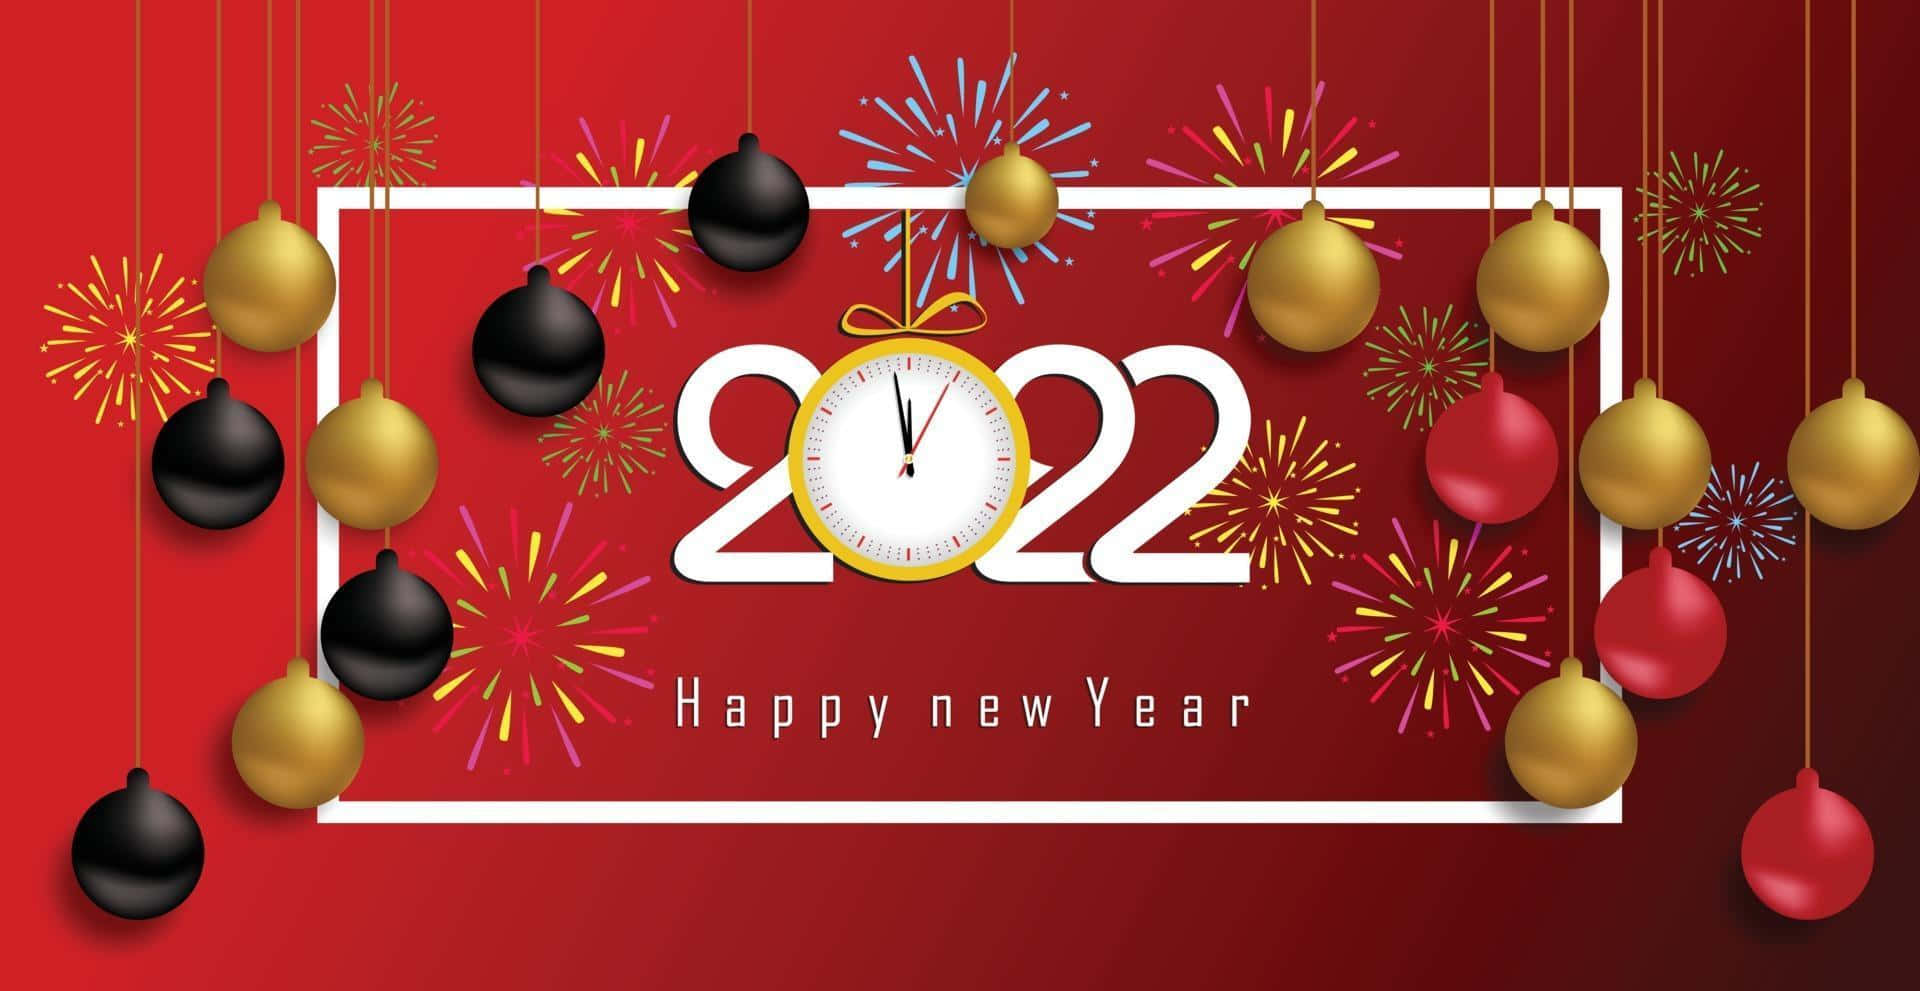 Wishing you an amazing Happy New Year 2022!